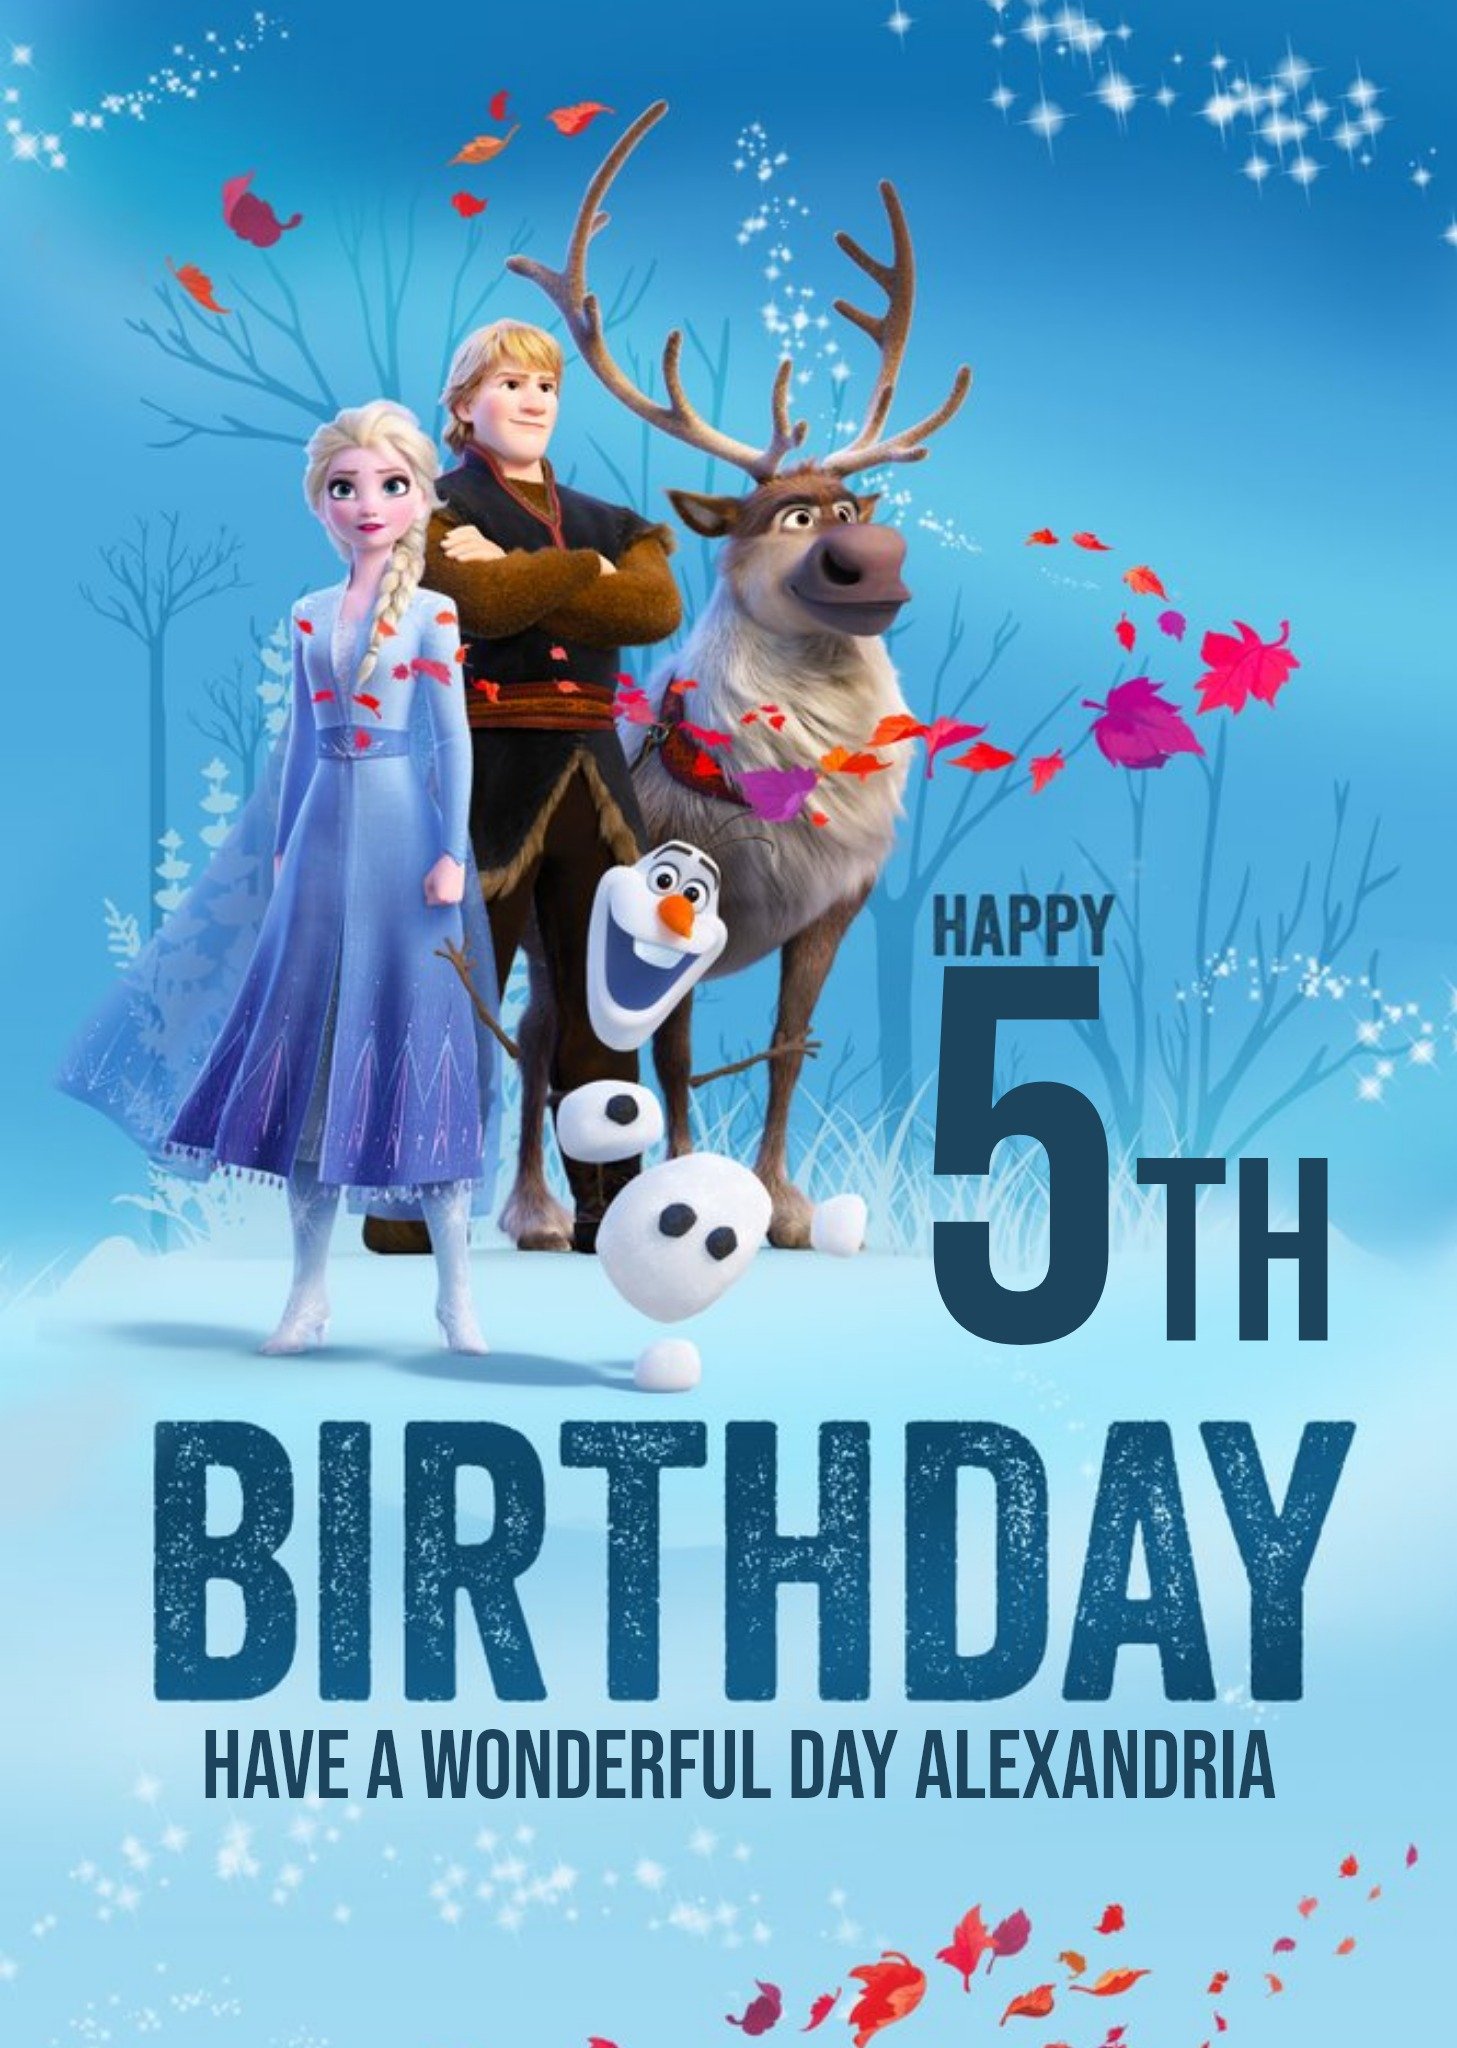 Disney Frozen 2 Elsa Anna Krist Sven Olaf 5th Birthday Card, Large